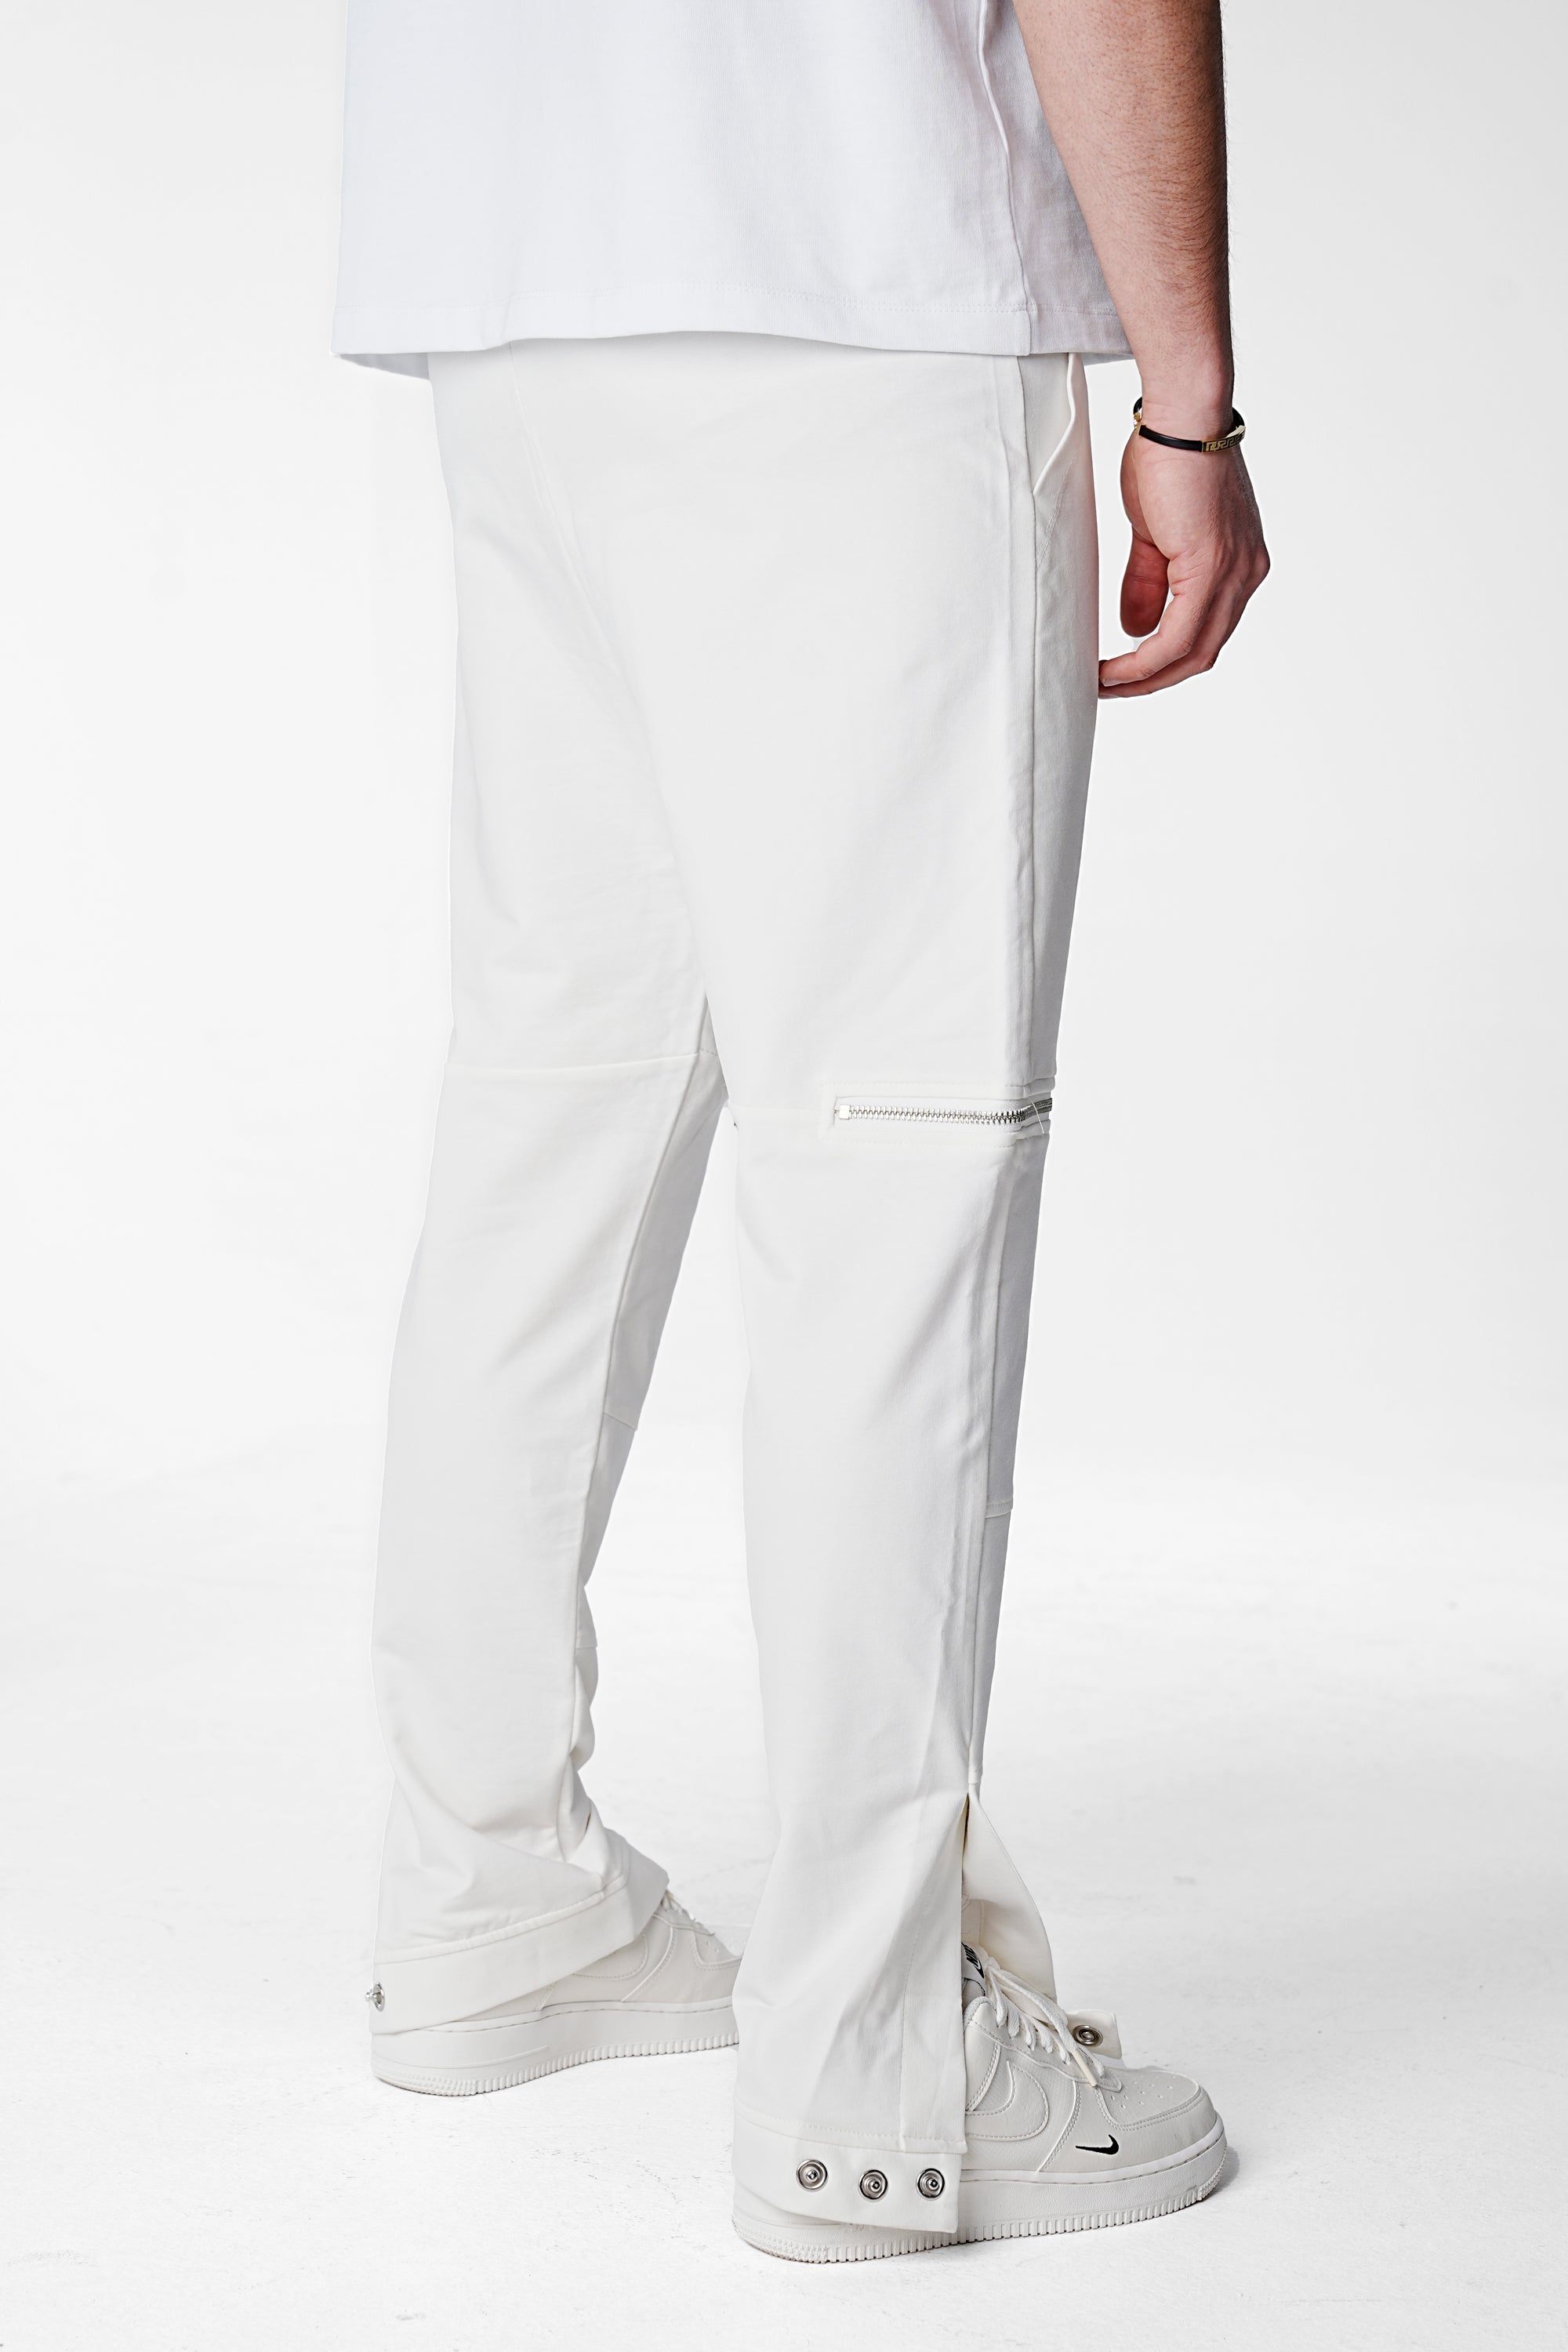 Regular Fit Premium Glory Pants - Cream - UNEFFECTED STUDIOS® - CARGO PANTS - UNEFFECTED STUDIOS®